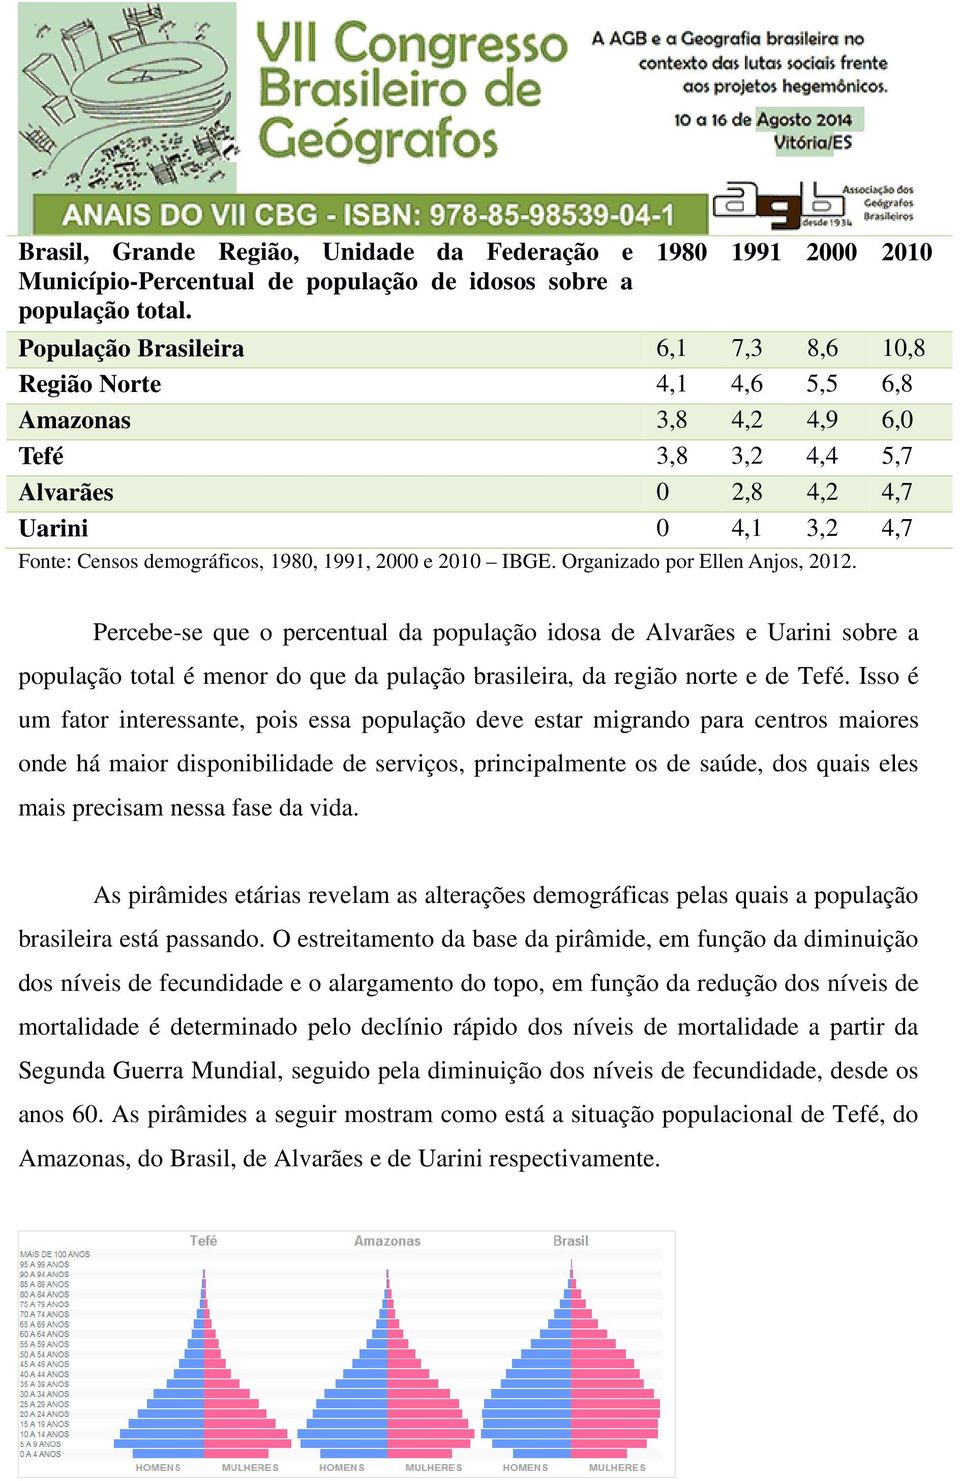 demográficos, 1980, 1991, 2000 e 2010 IBGE. Organizado por Ellen Anjos, 2012.